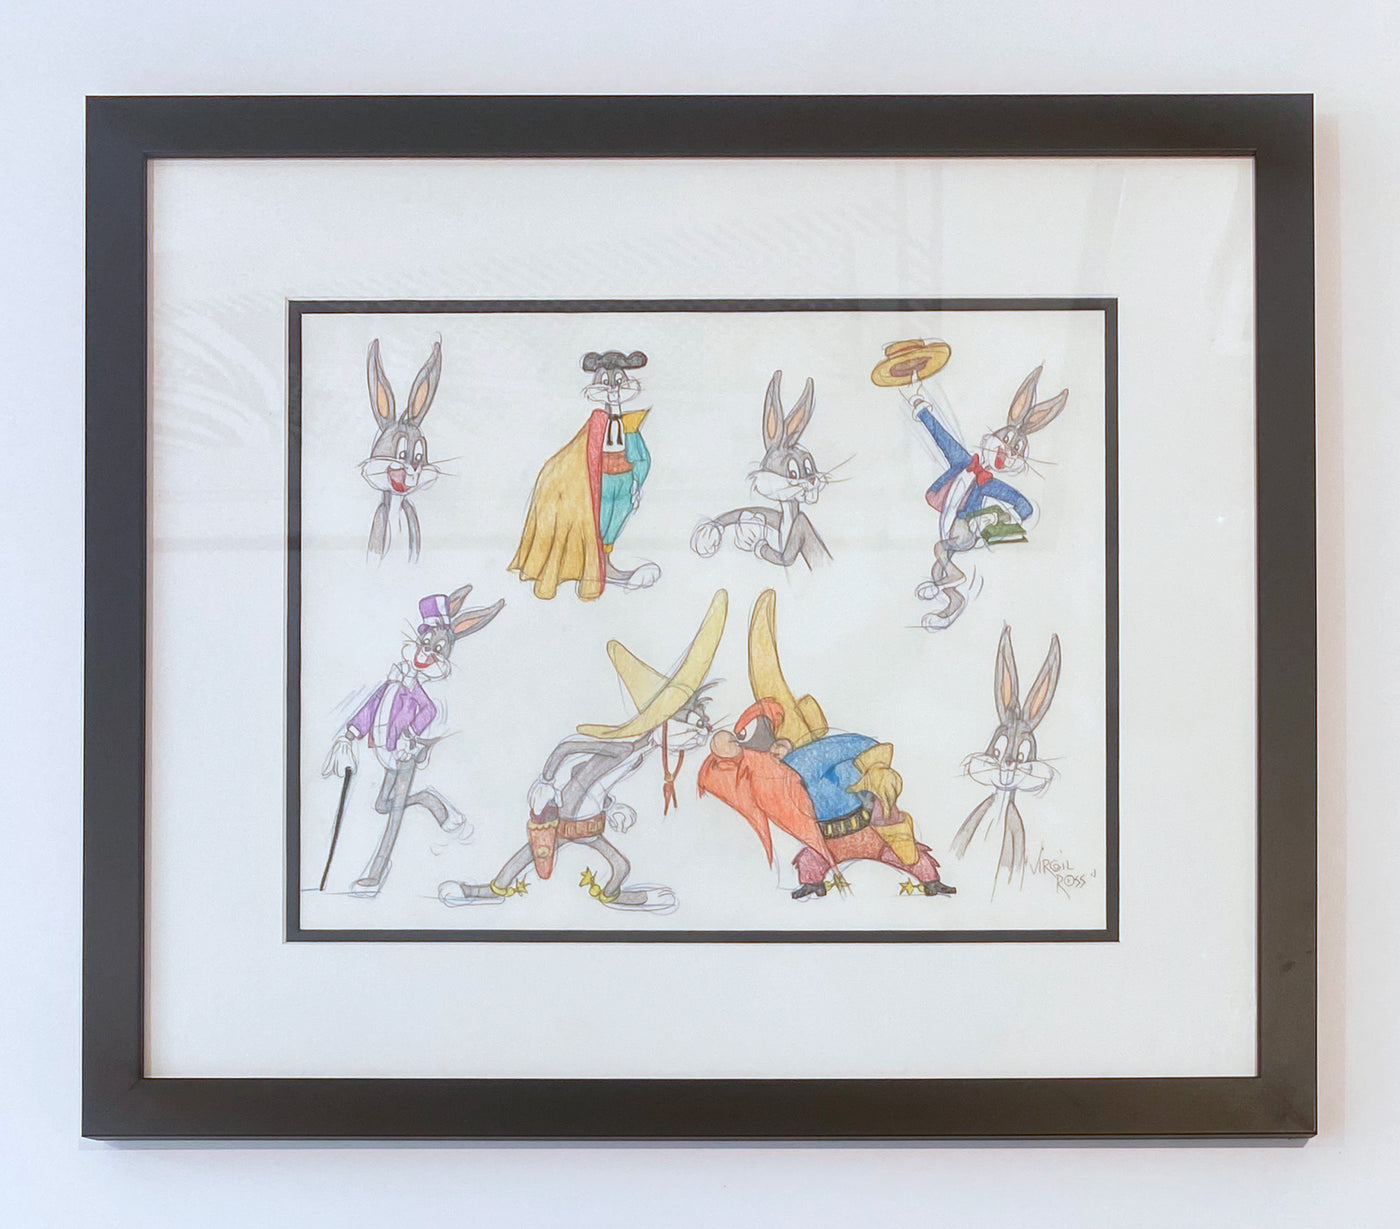 Original Warner Brothers Virgil Ross Model Sheet Animation Drawing featuring Bugs Bunny and Yosemite Sam